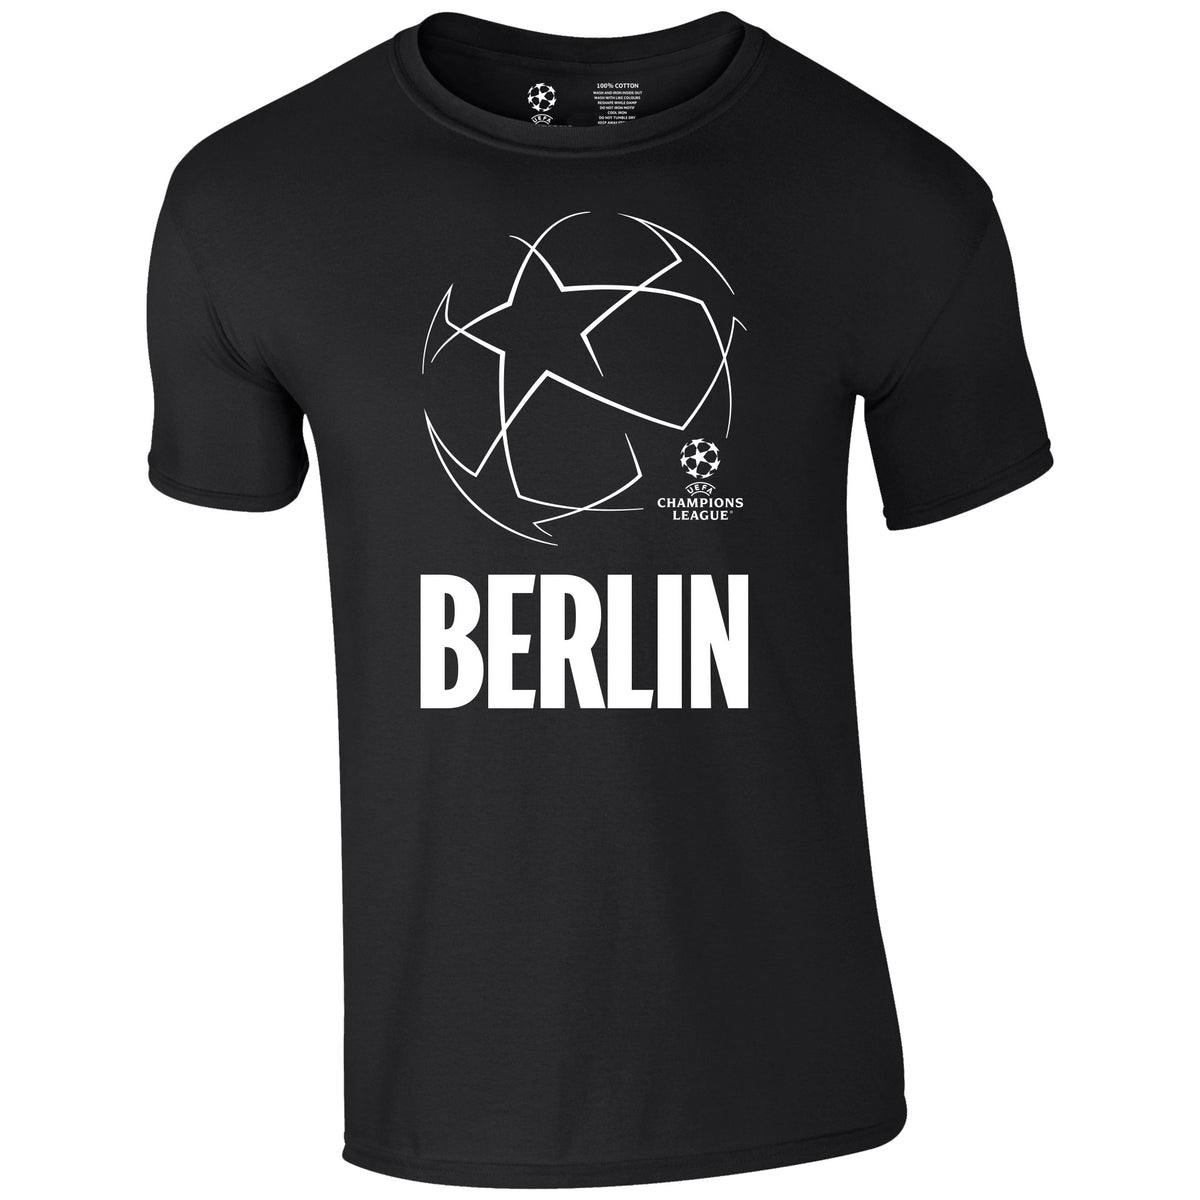 Champions League Starball Berlin City T-Shirt Black